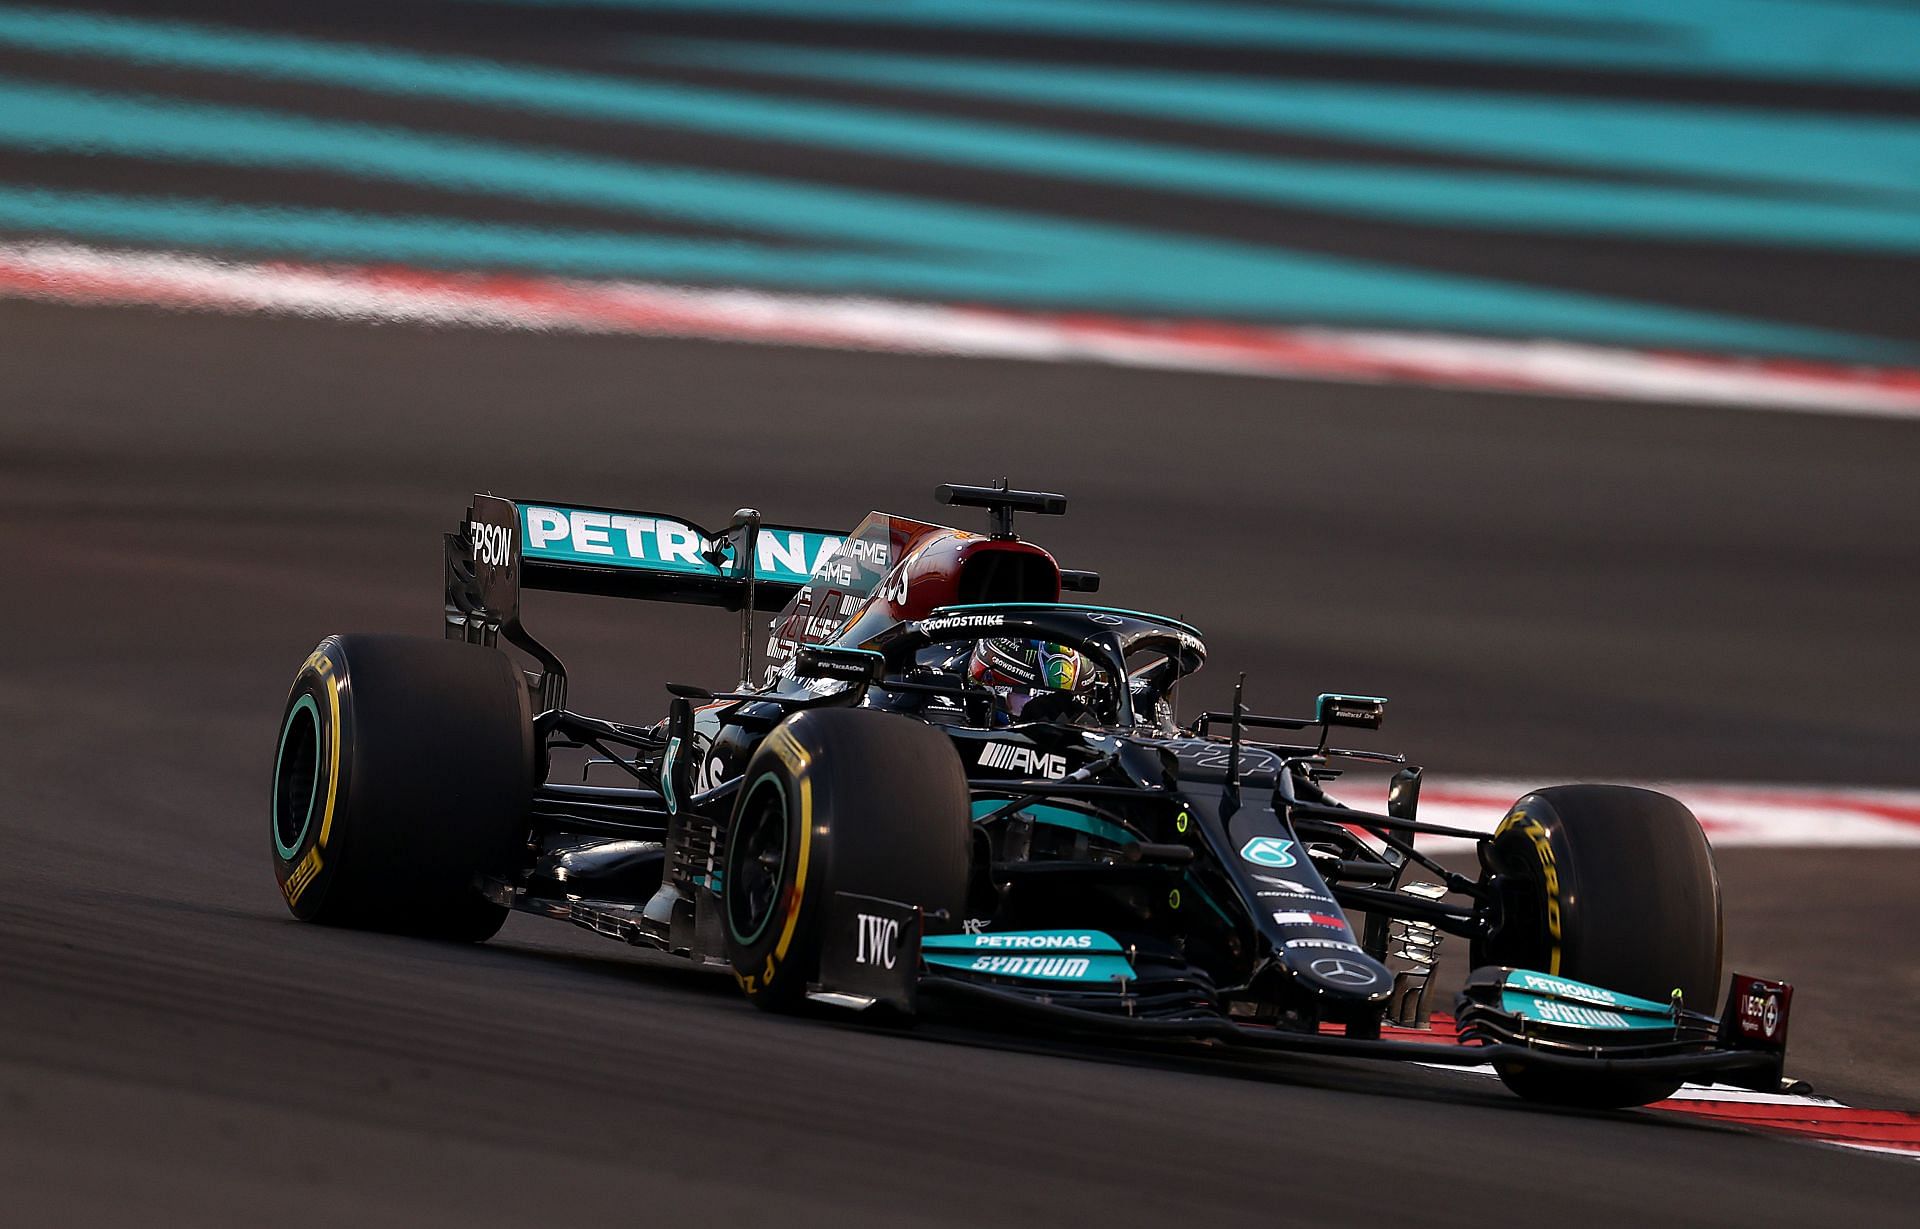 F1 Grand Prix of Abu Dhabi - The Mercedes of Lewis Hamilton on Sunday.